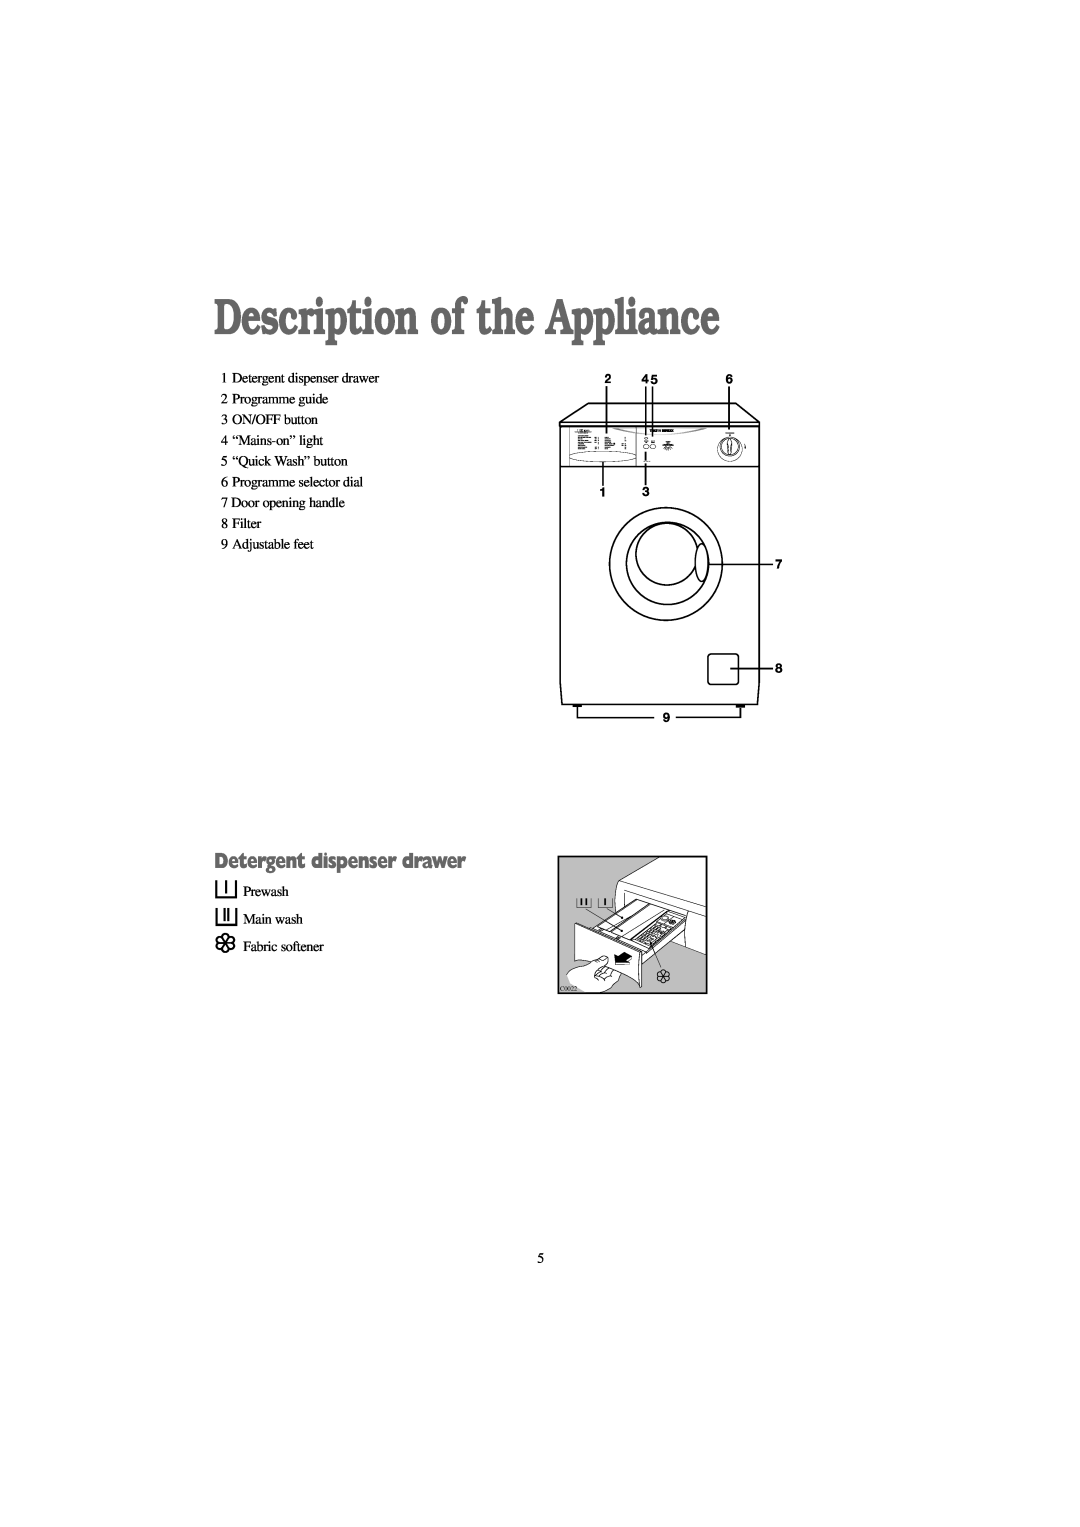 Tricity Bendix AW 1100 W Description of the Appliance, Detergent dispenser drawer, 1100 rpm, Programme, Shower System 